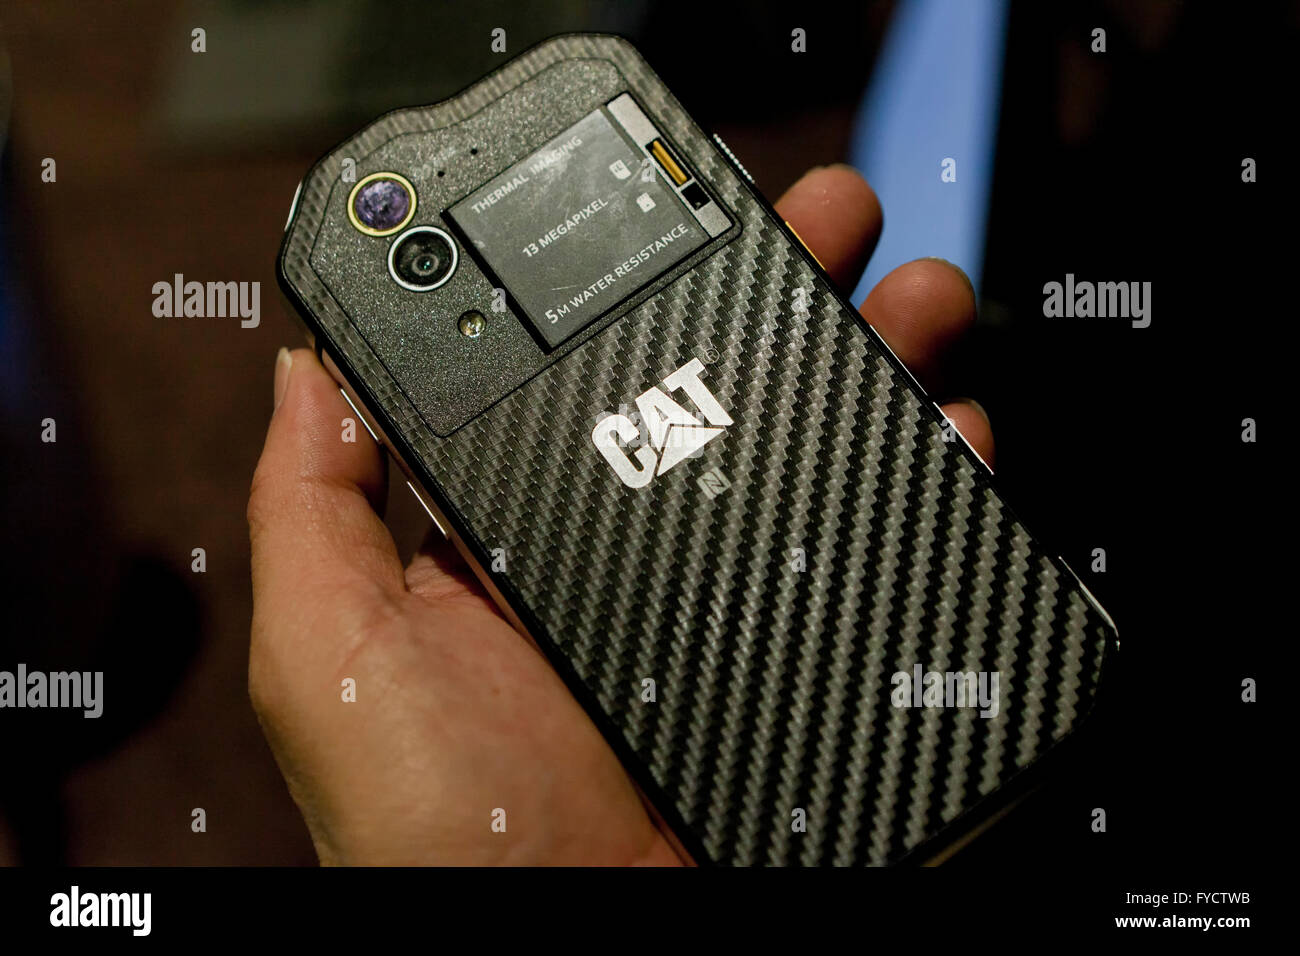 CAT-S60 wasserdichten Smartphone mit integrierter Wärmebildkamera (FLIR) -  USA Stockfotografie - Alamy